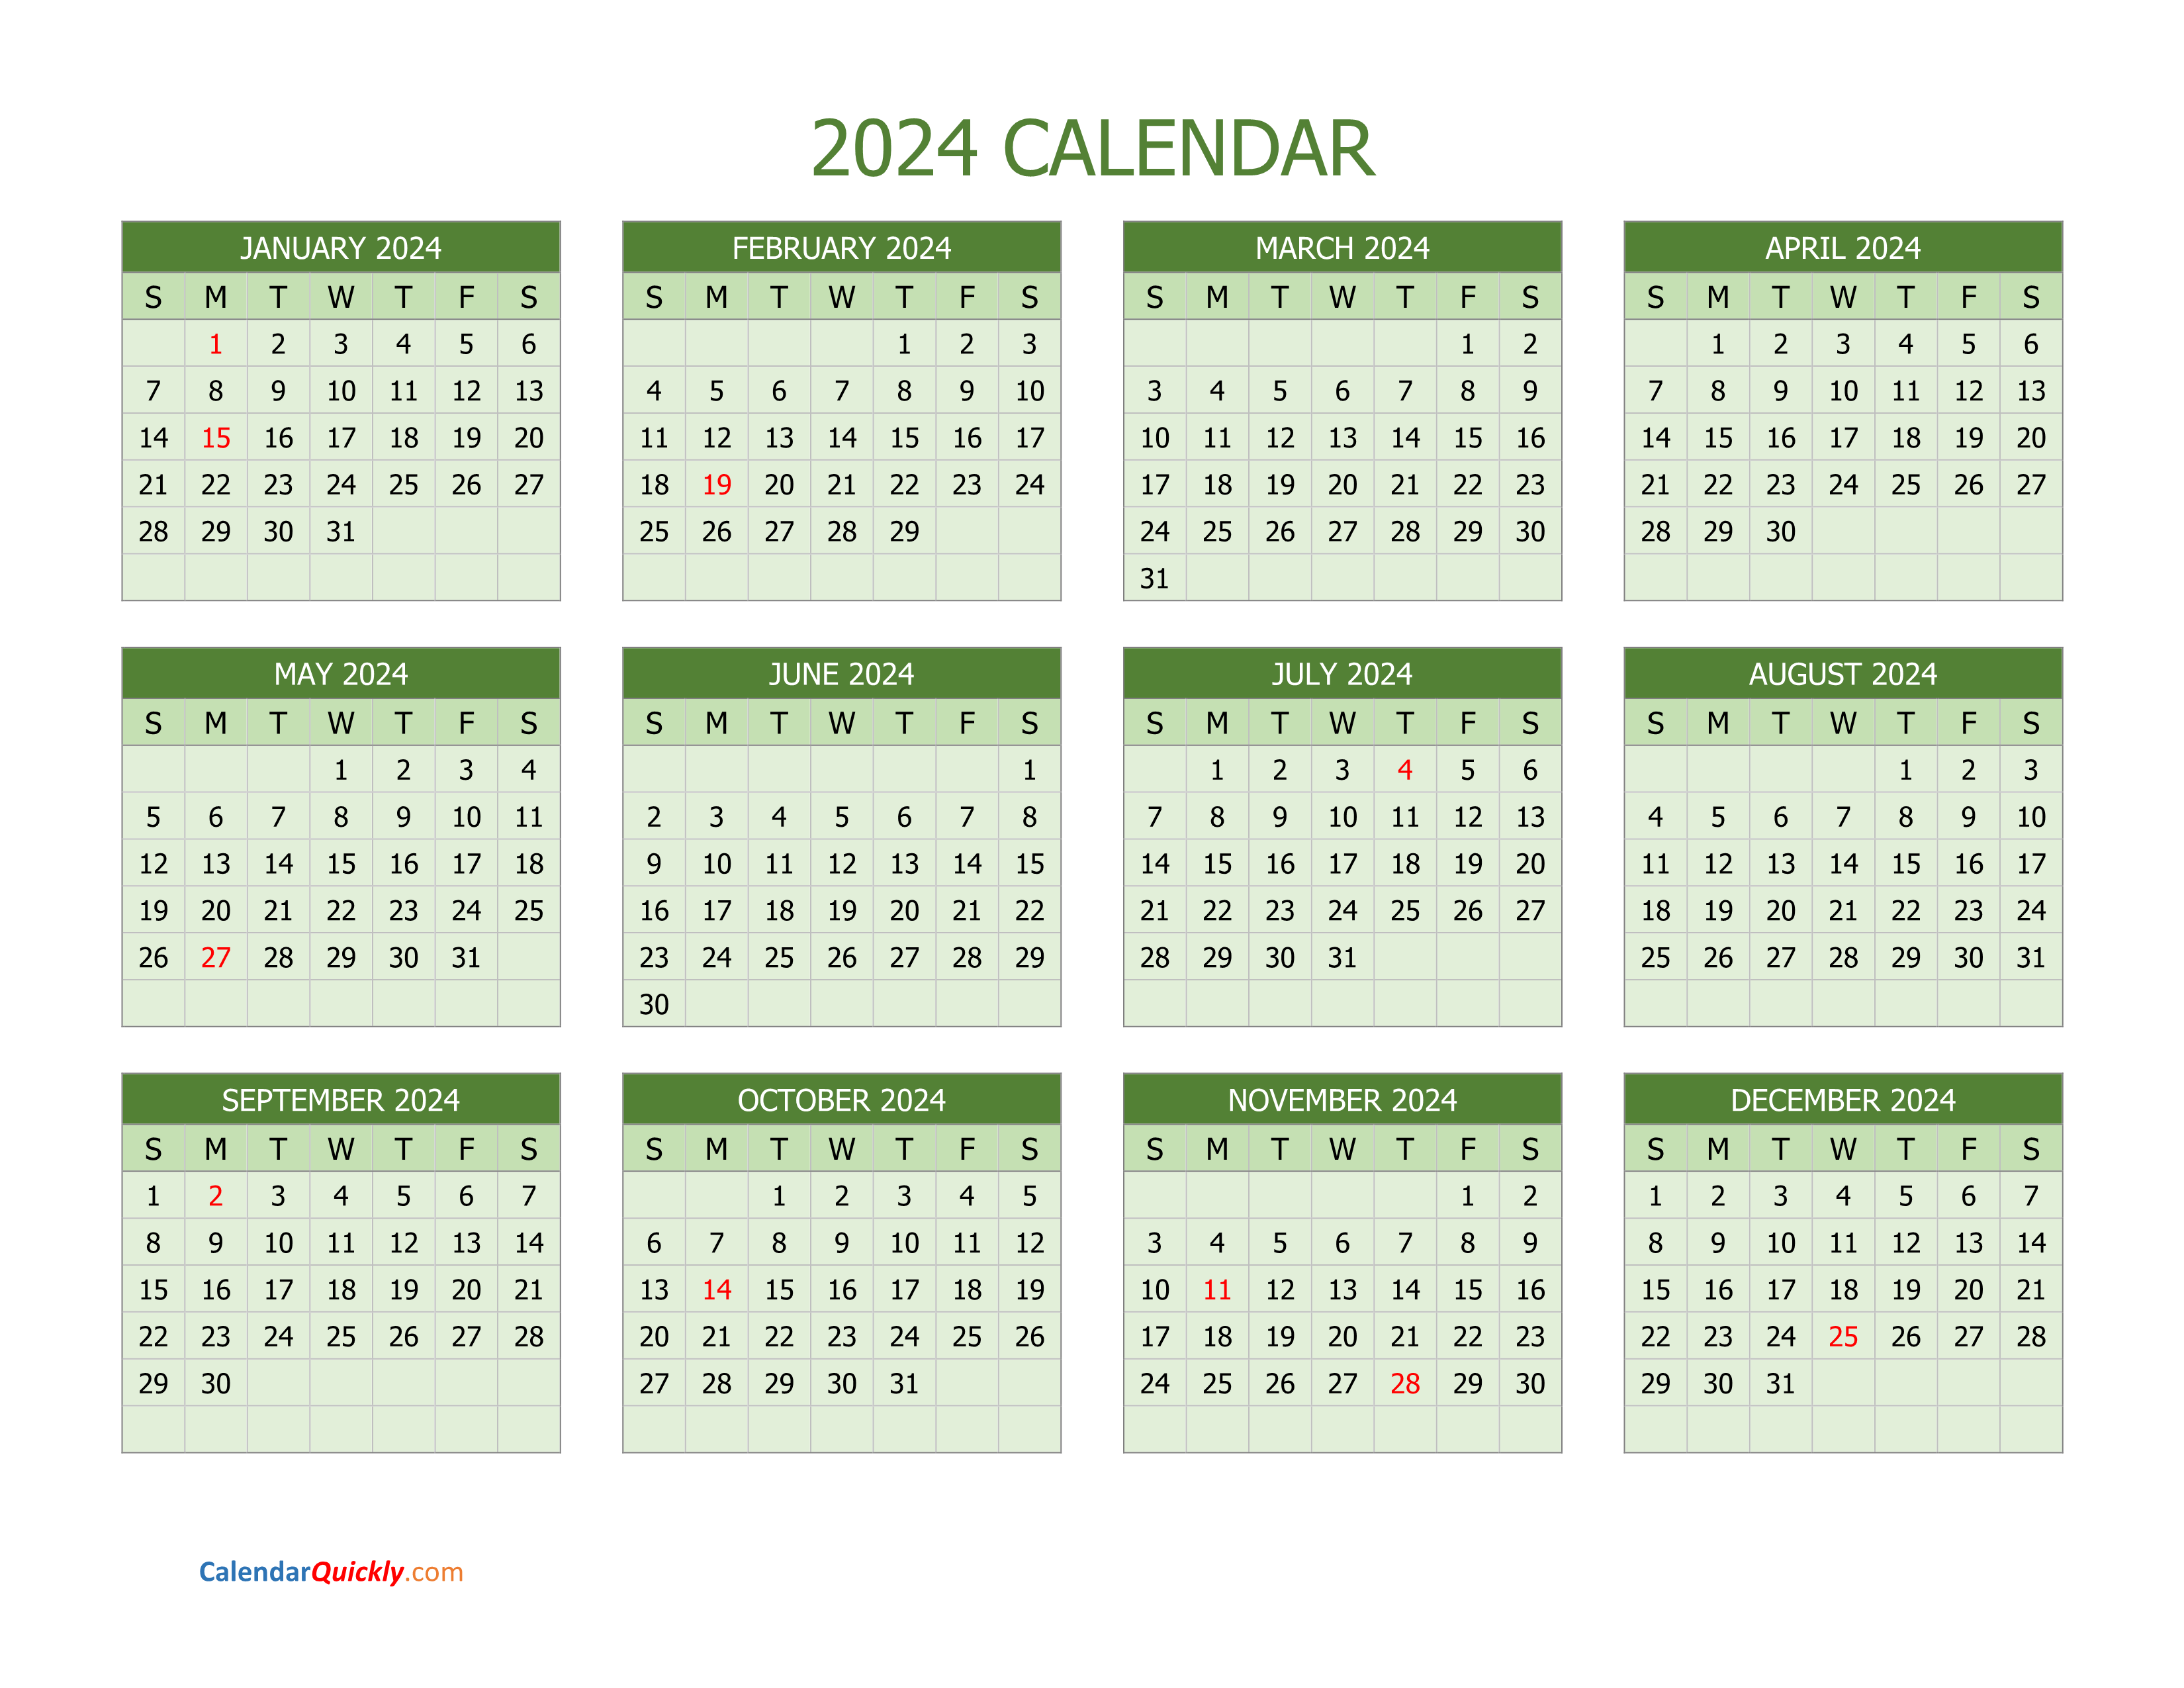 Yearly Calendar 2024 Calendar Quickly